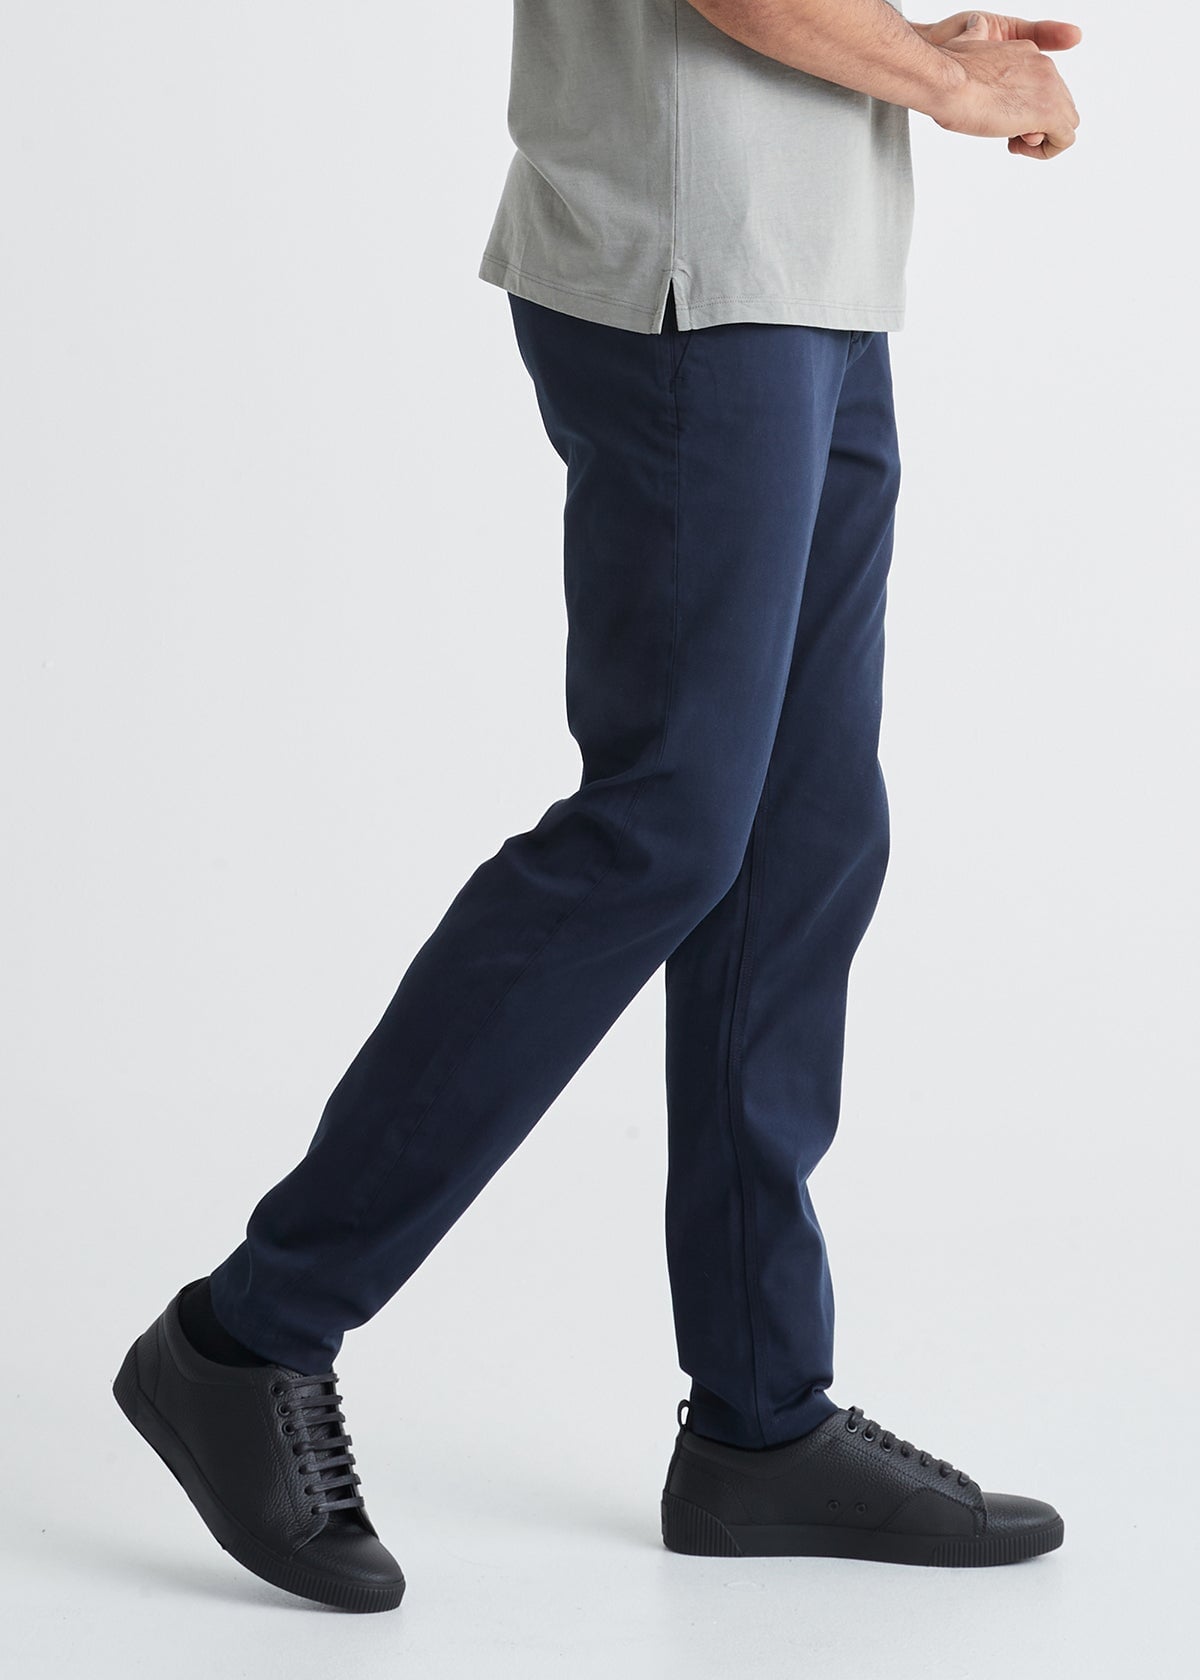 mens stretch deep blue chino pants side